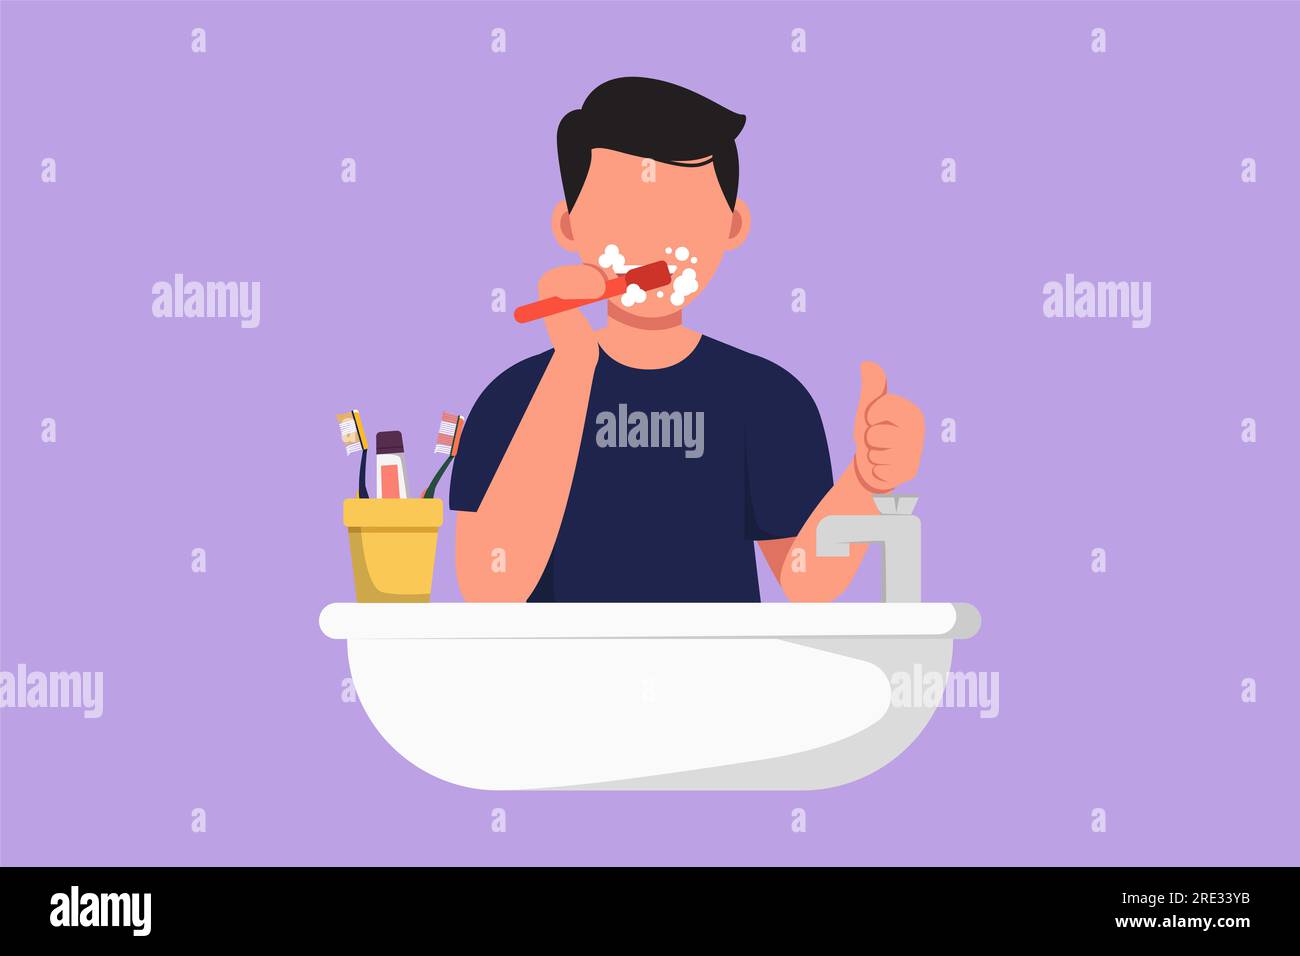 Cartoon flat style drawing man brushing teeth with thumbs up gesture ...